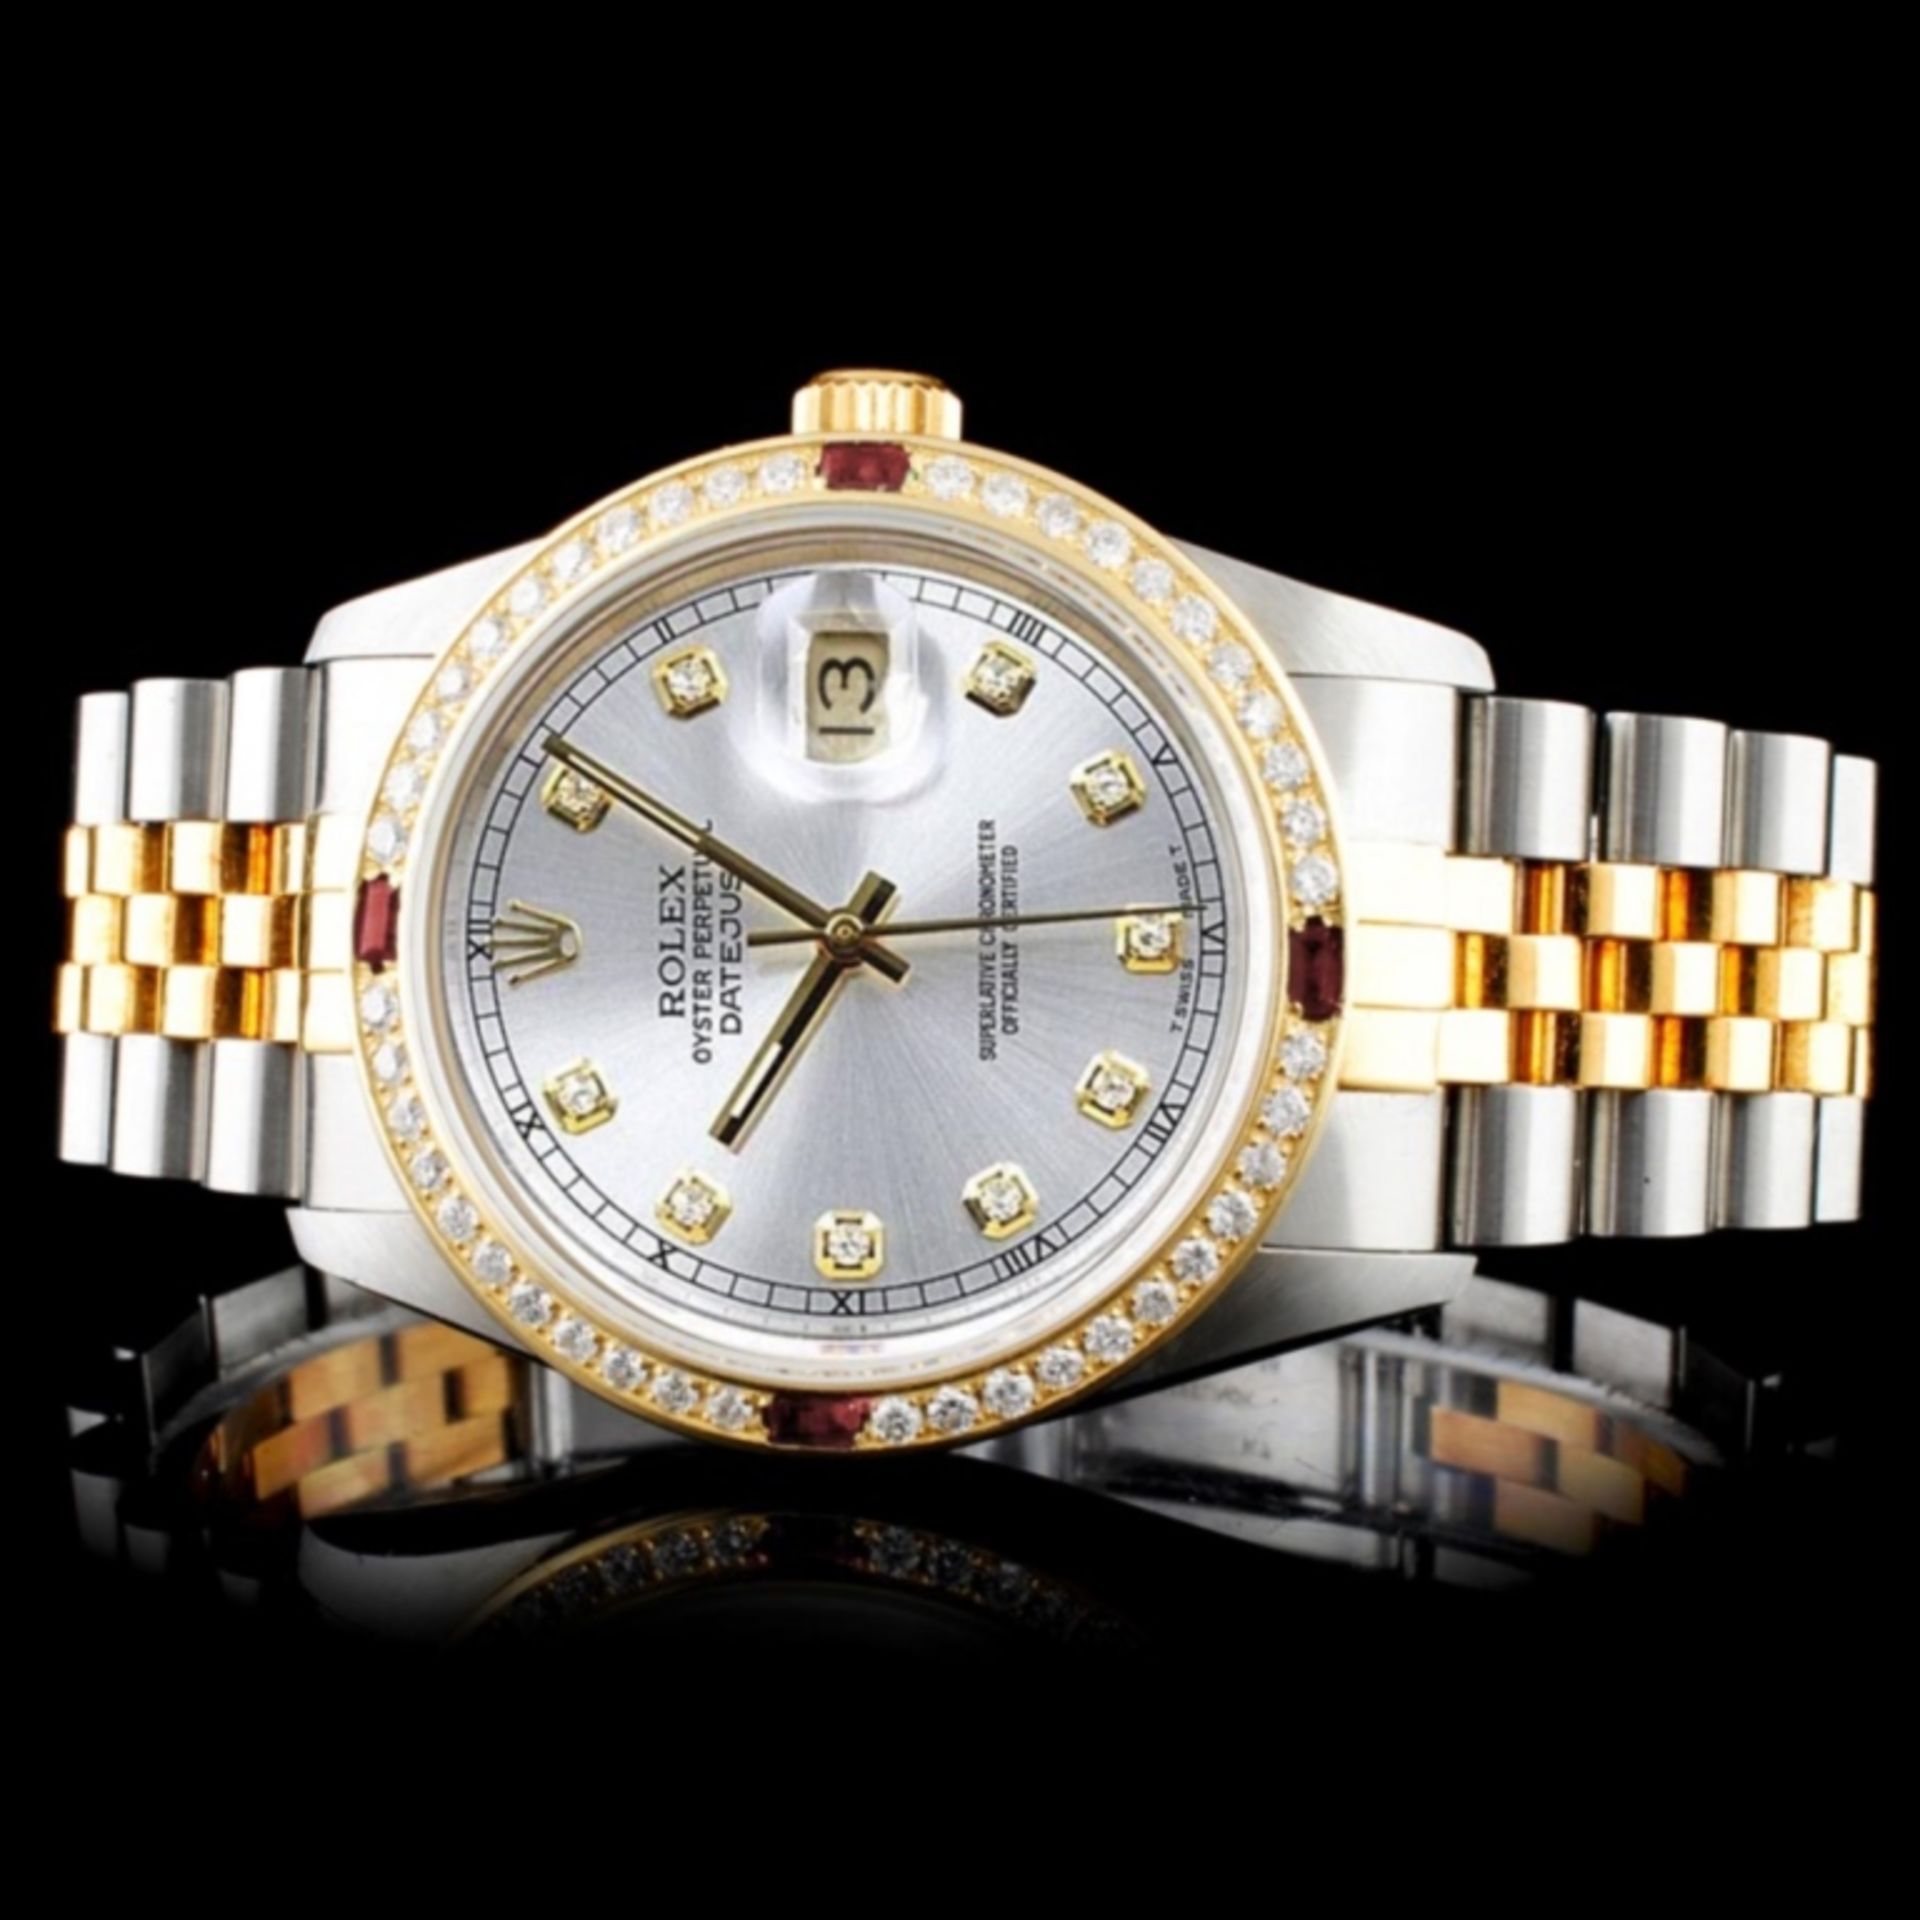 Rolex DateJust 18K/SS Diamond 36mm Watch - Image 2 of 6